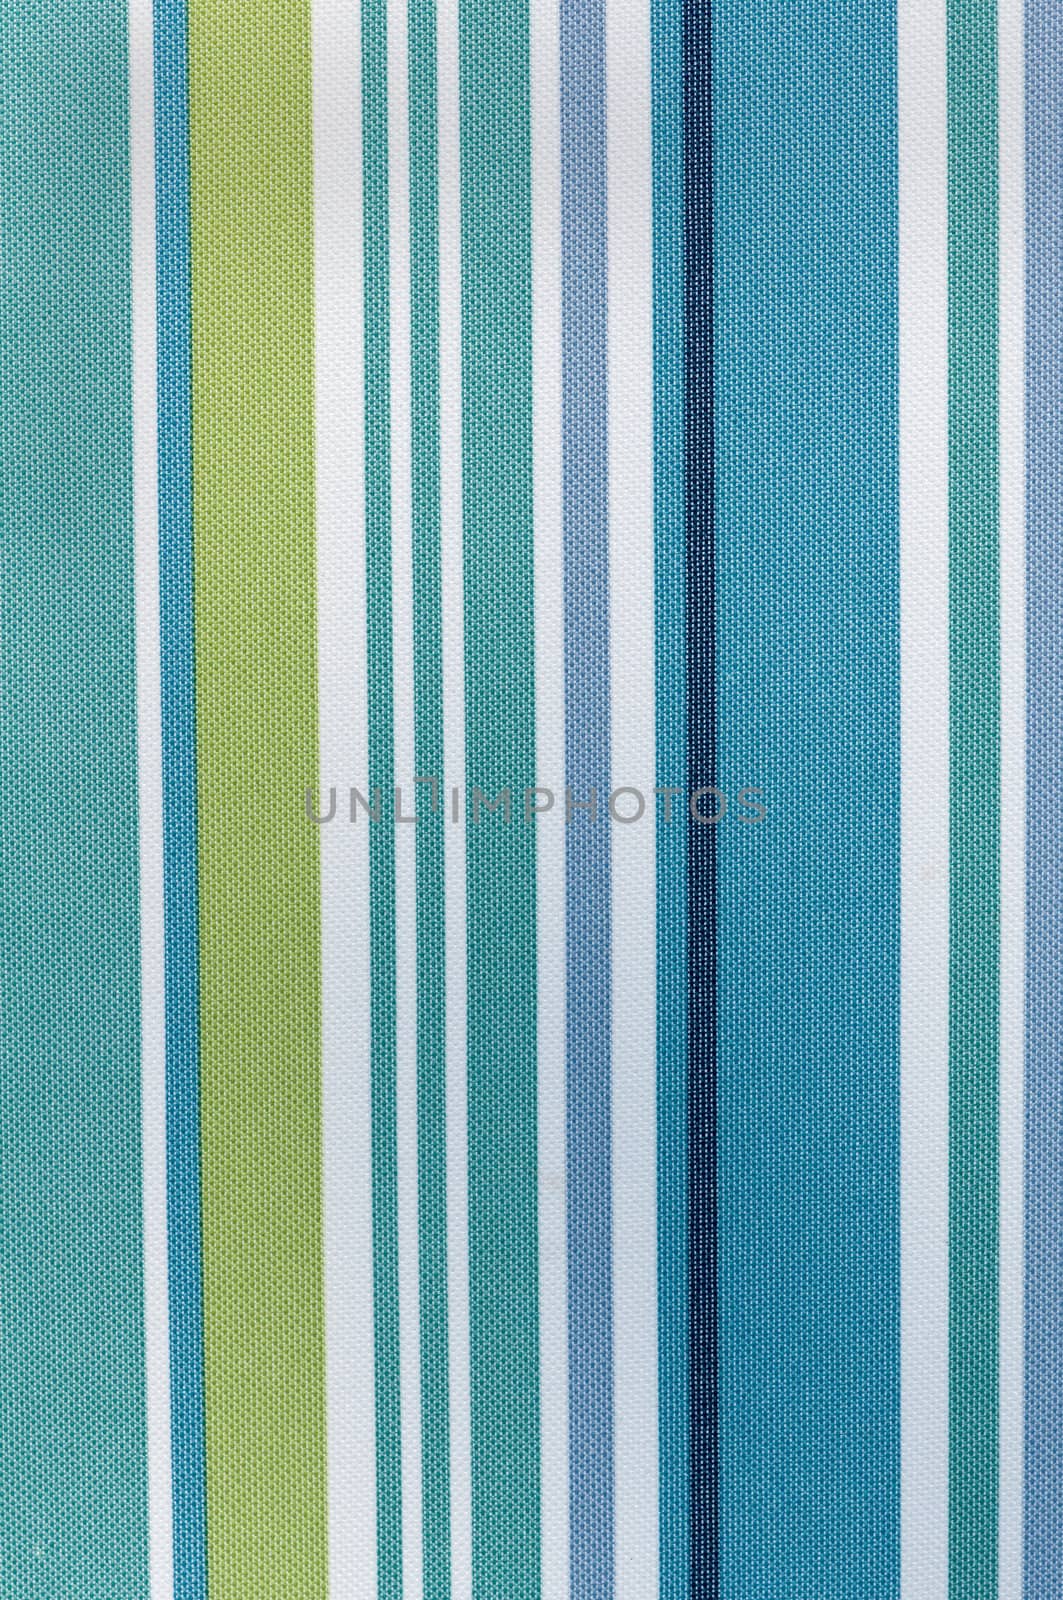 stripe fabric texture by DNKSTUDIO